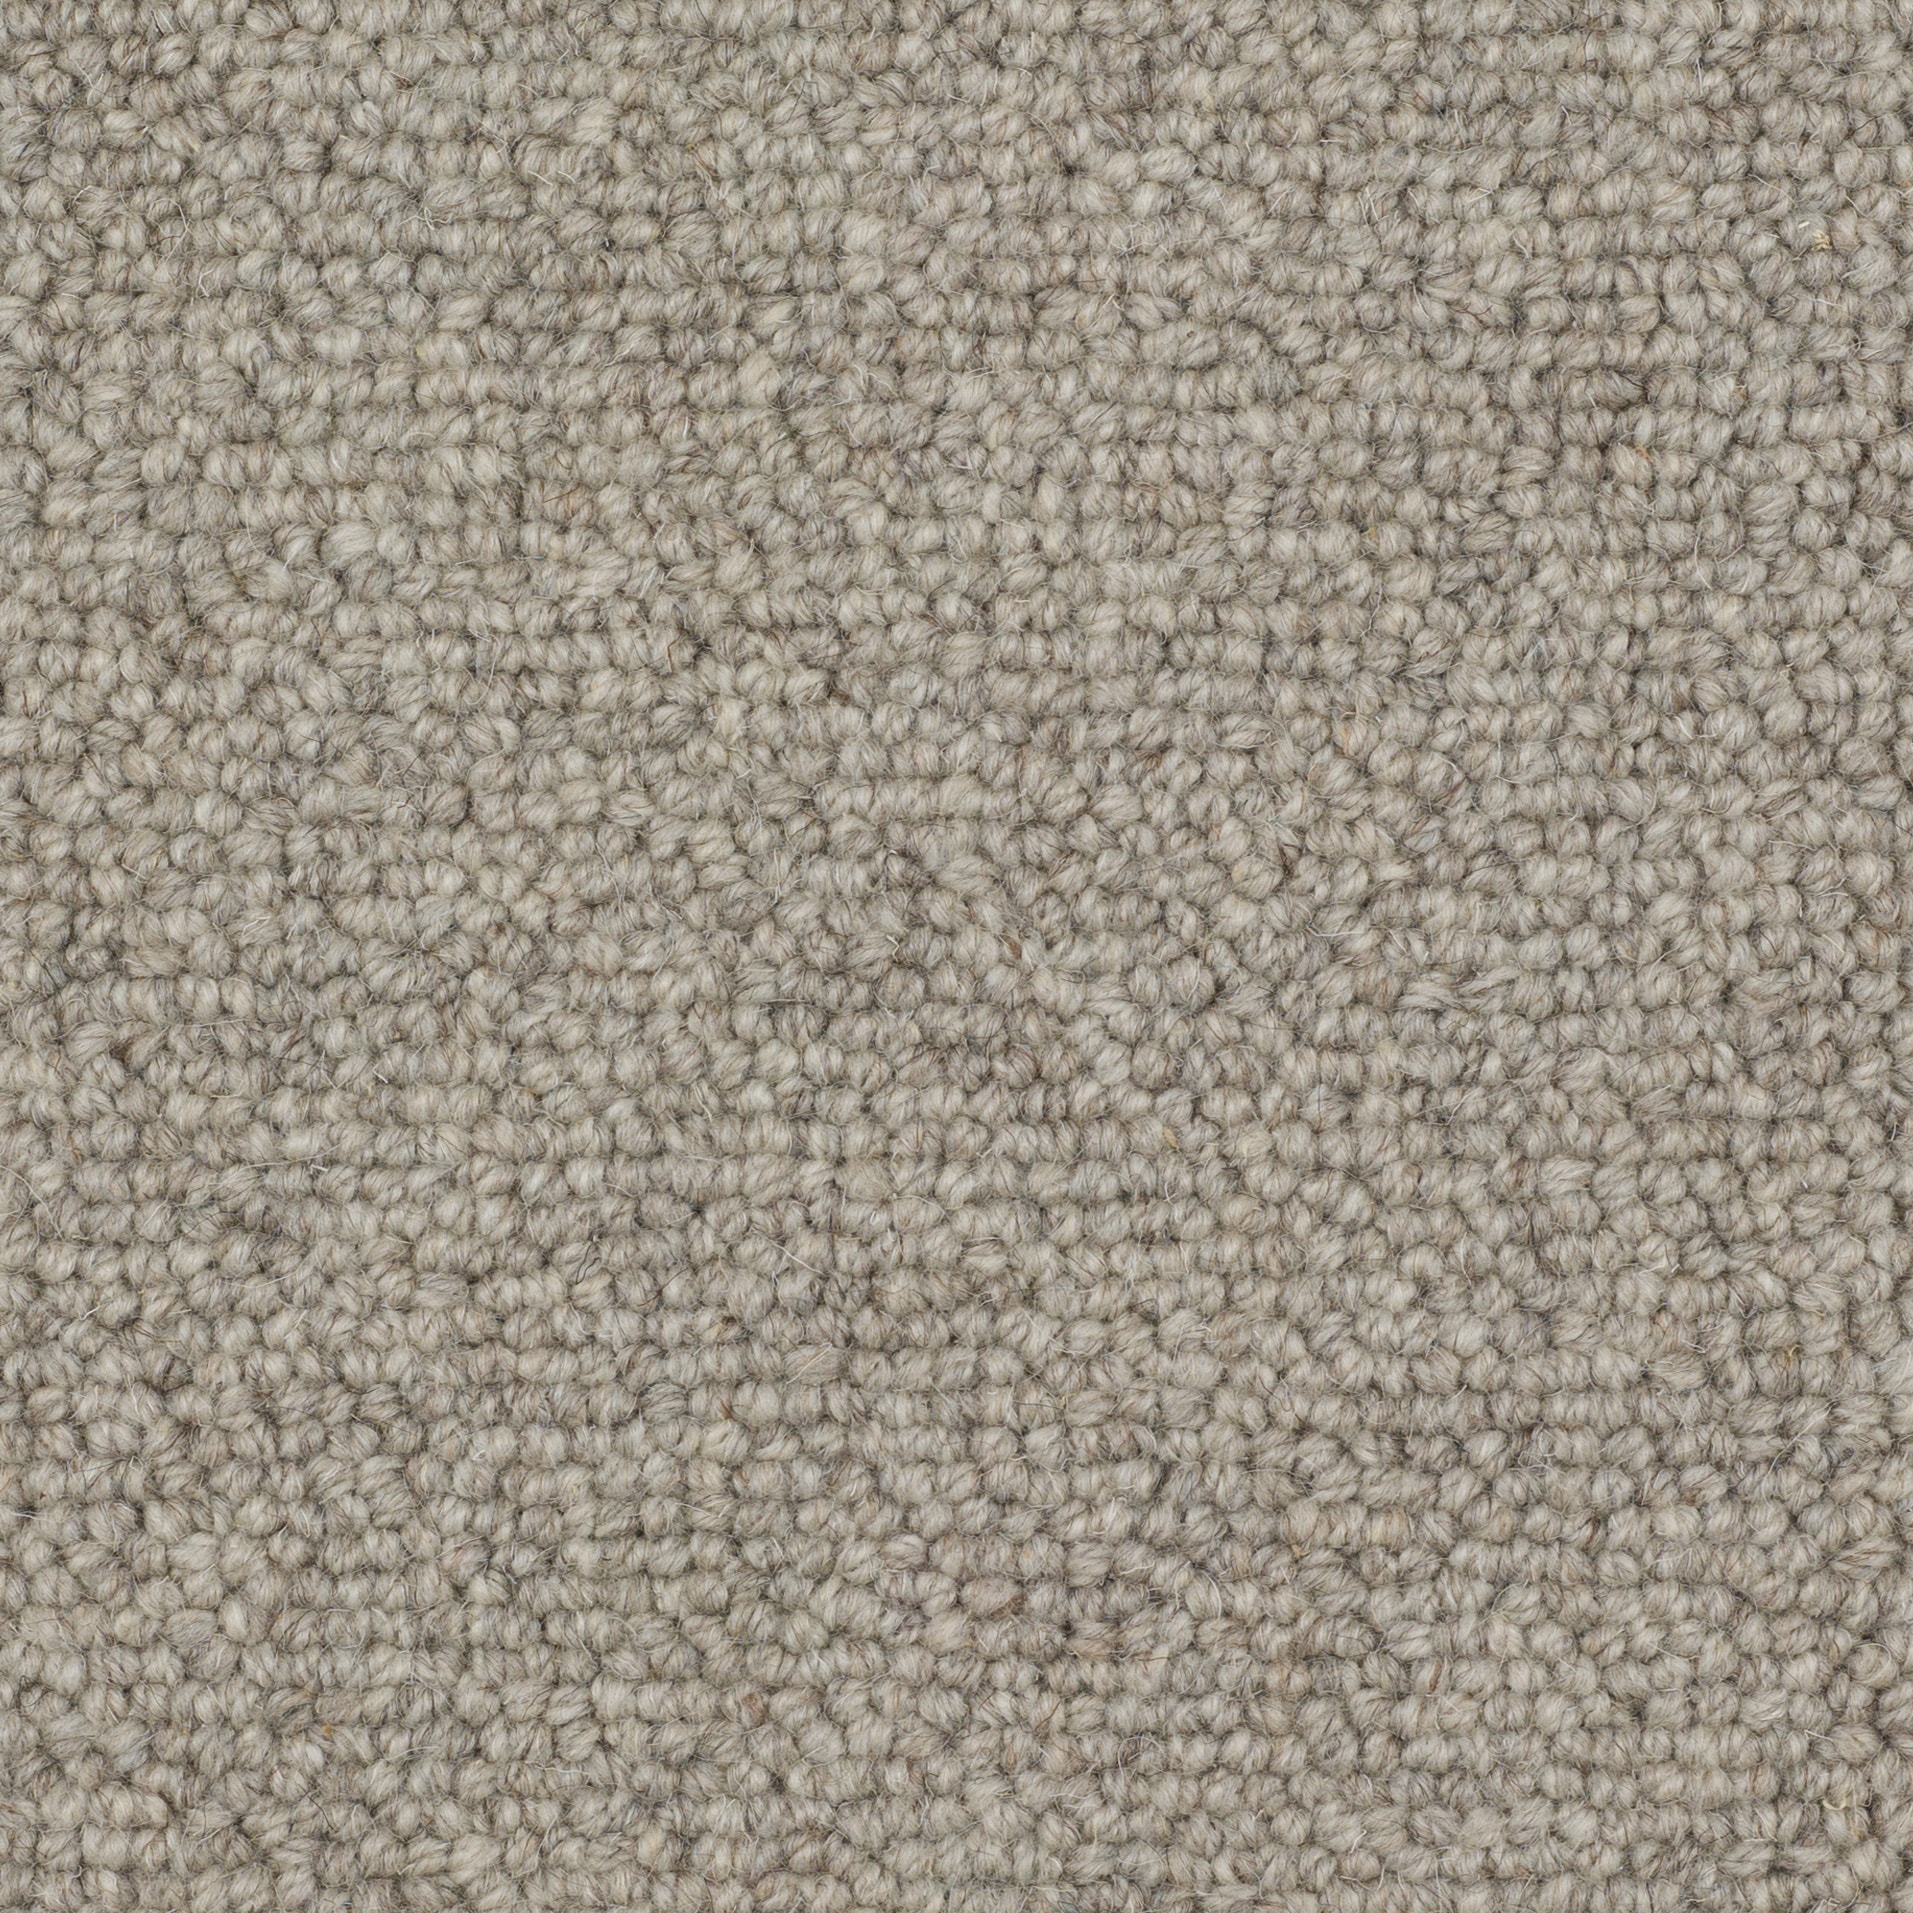 Shetland Weave: Monk’s Stone - 100% Wool Carpet